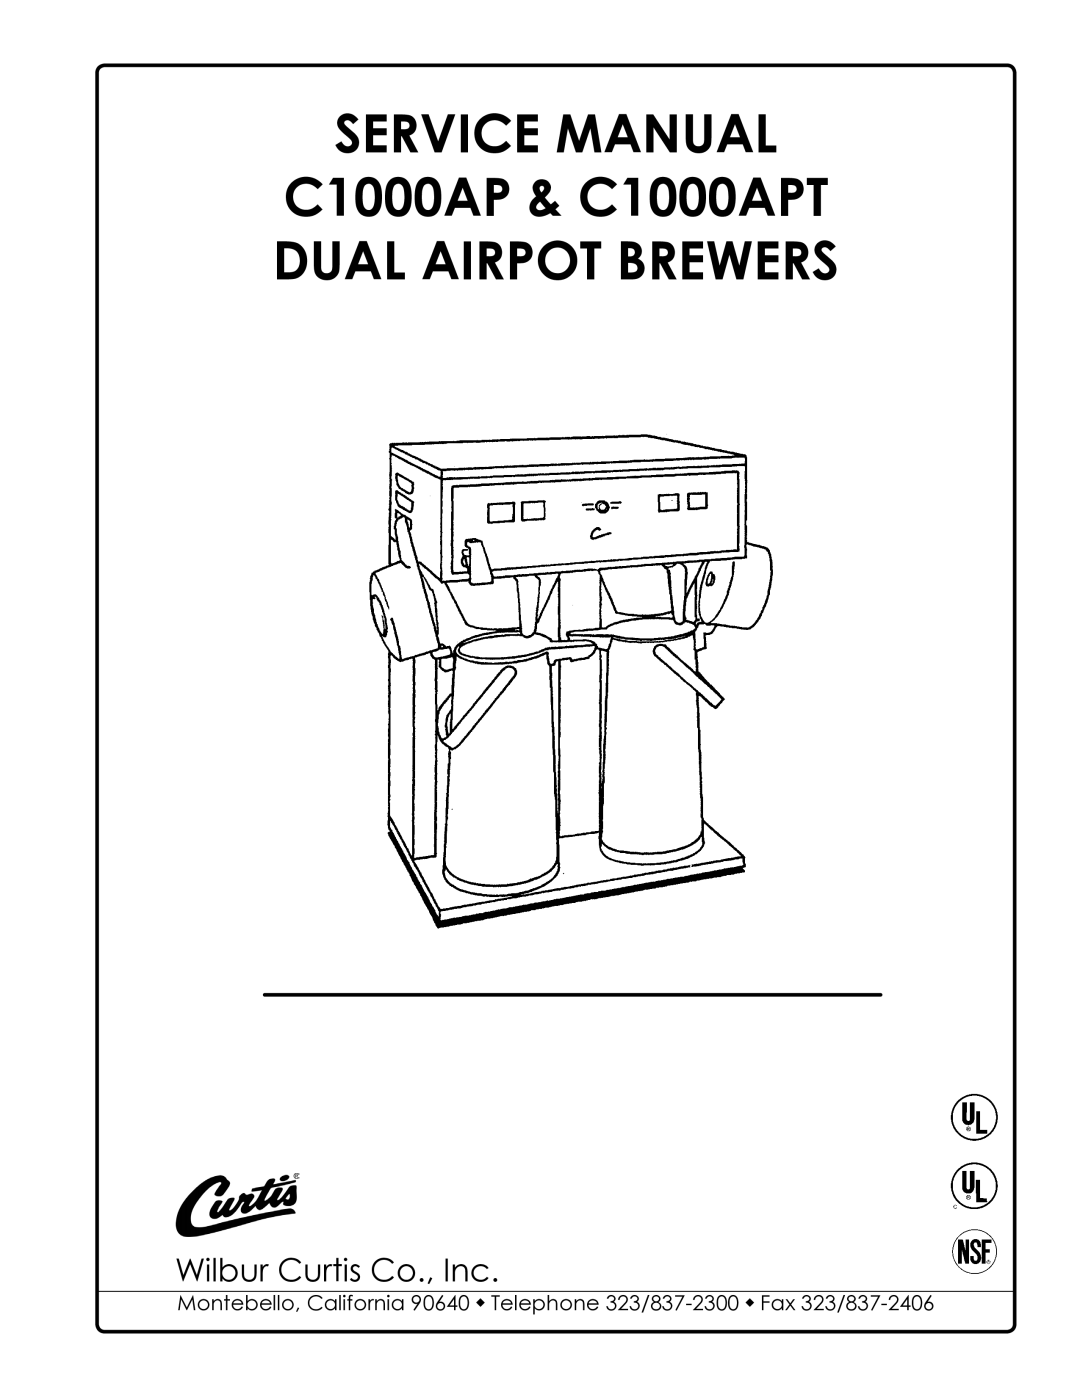 Wibur Curtis Company C1000APT service manual Dual Airpot Brewers 